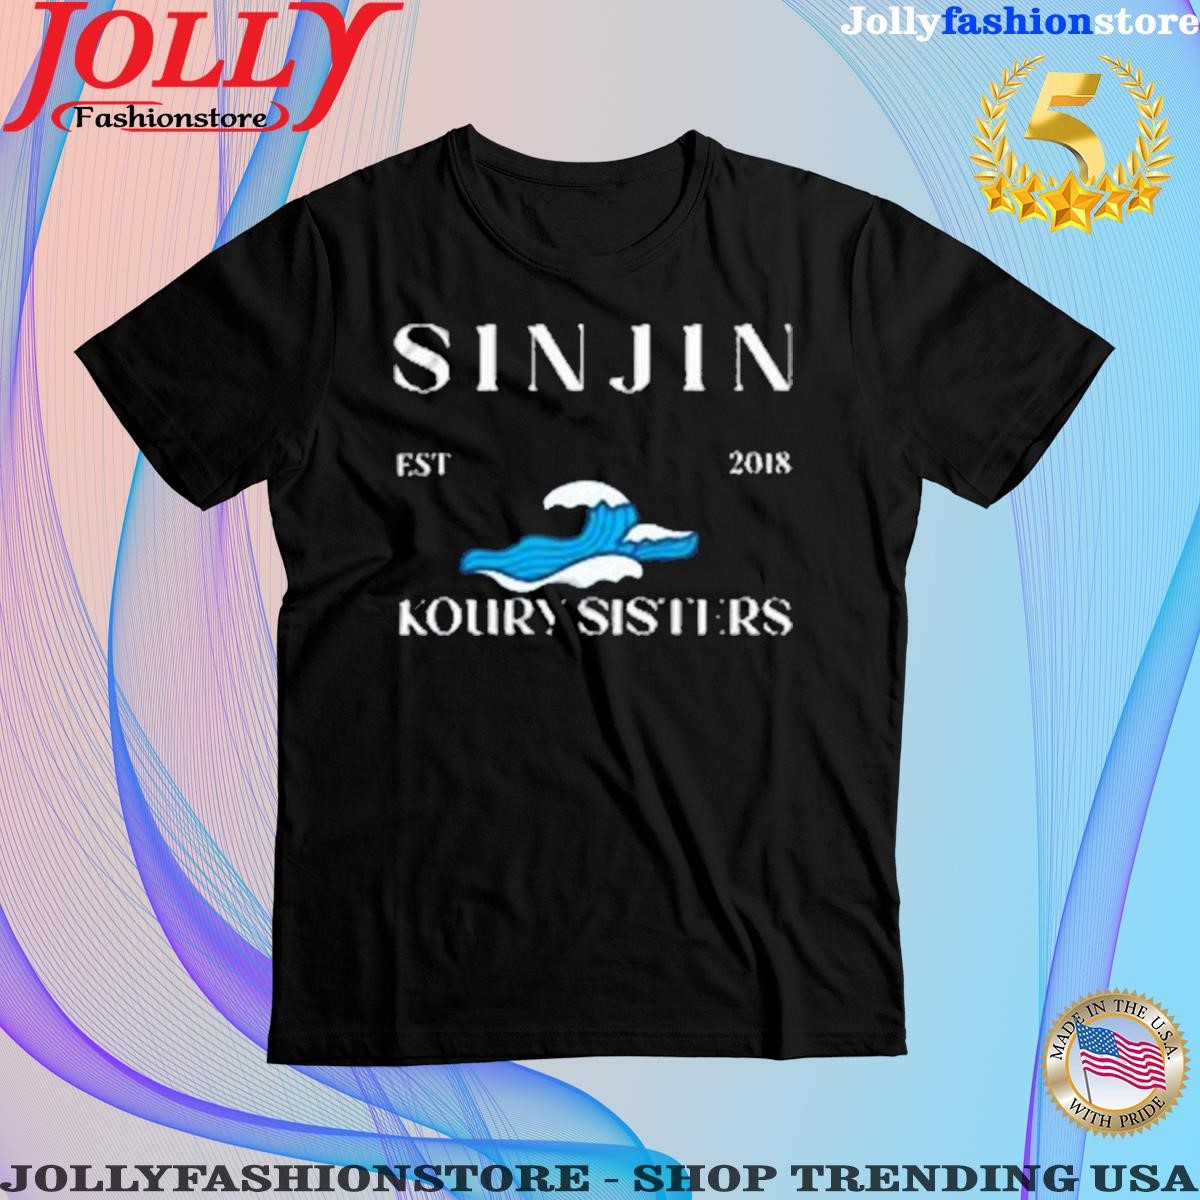 Sinjin koury sisters est 2018 shirt